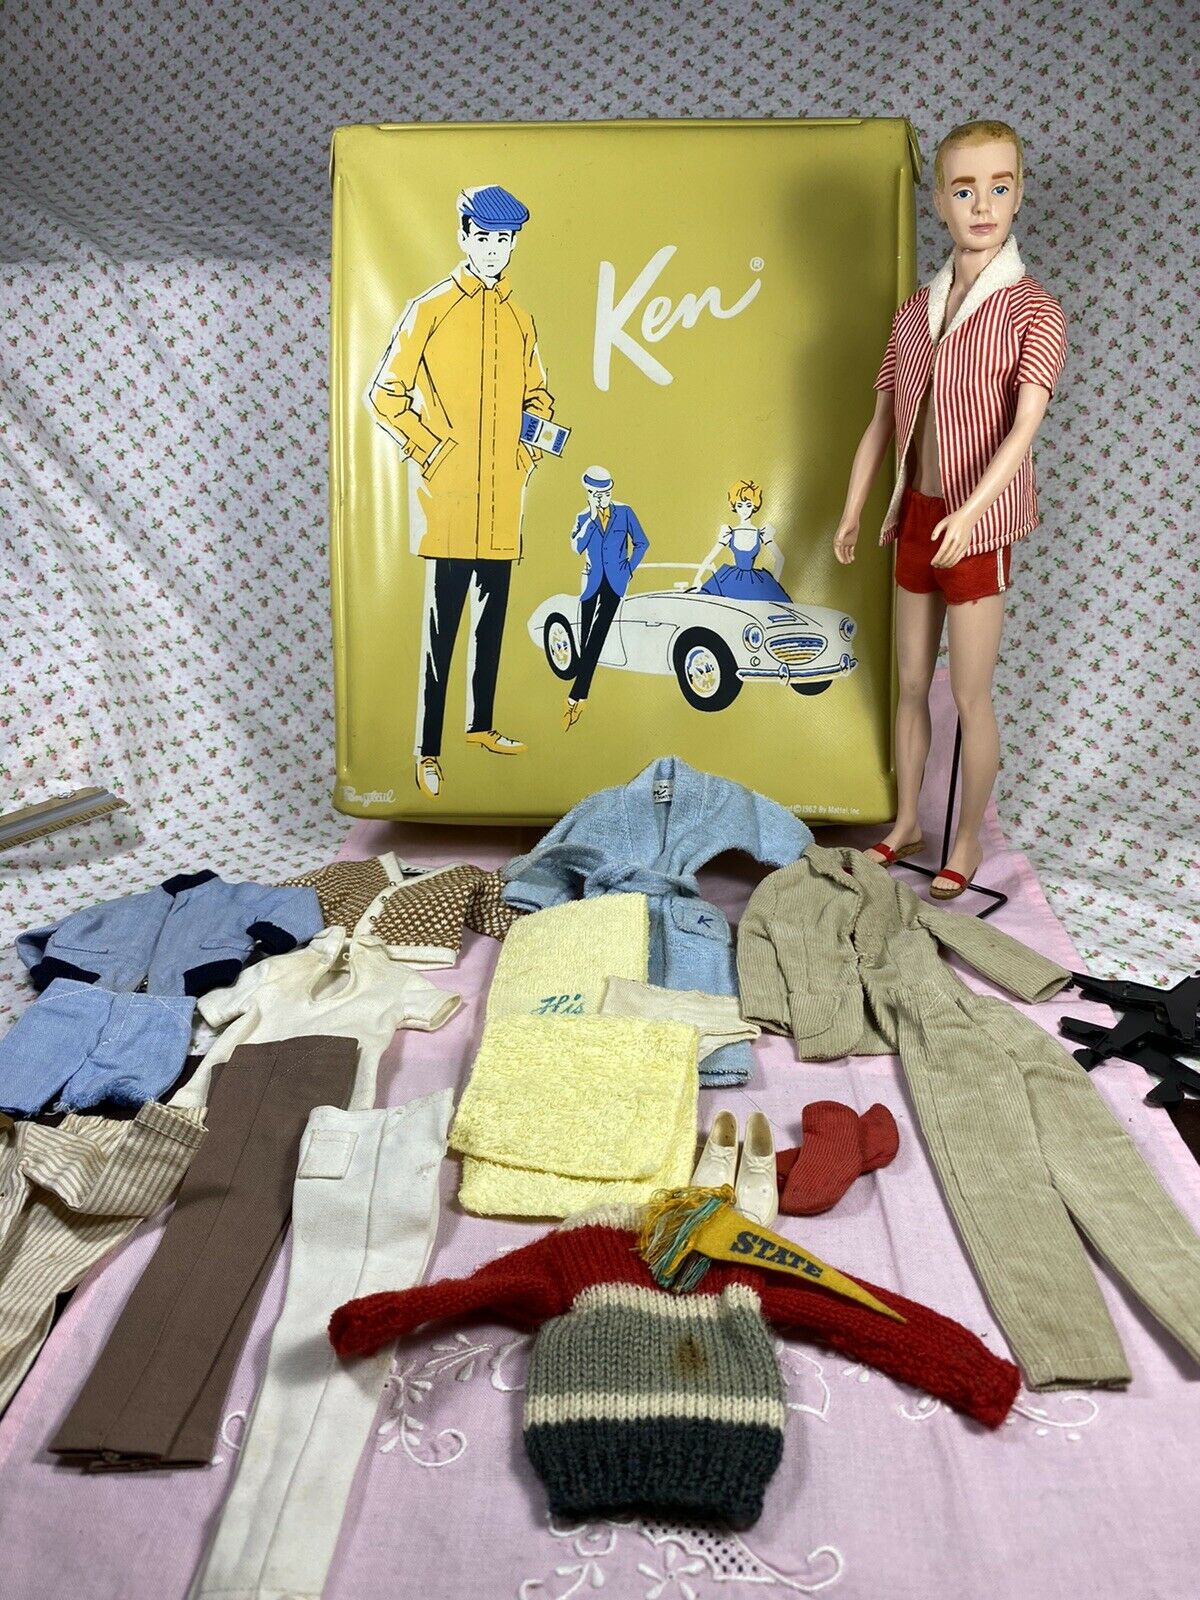 Circa 1962 Ken Doll And Clothing